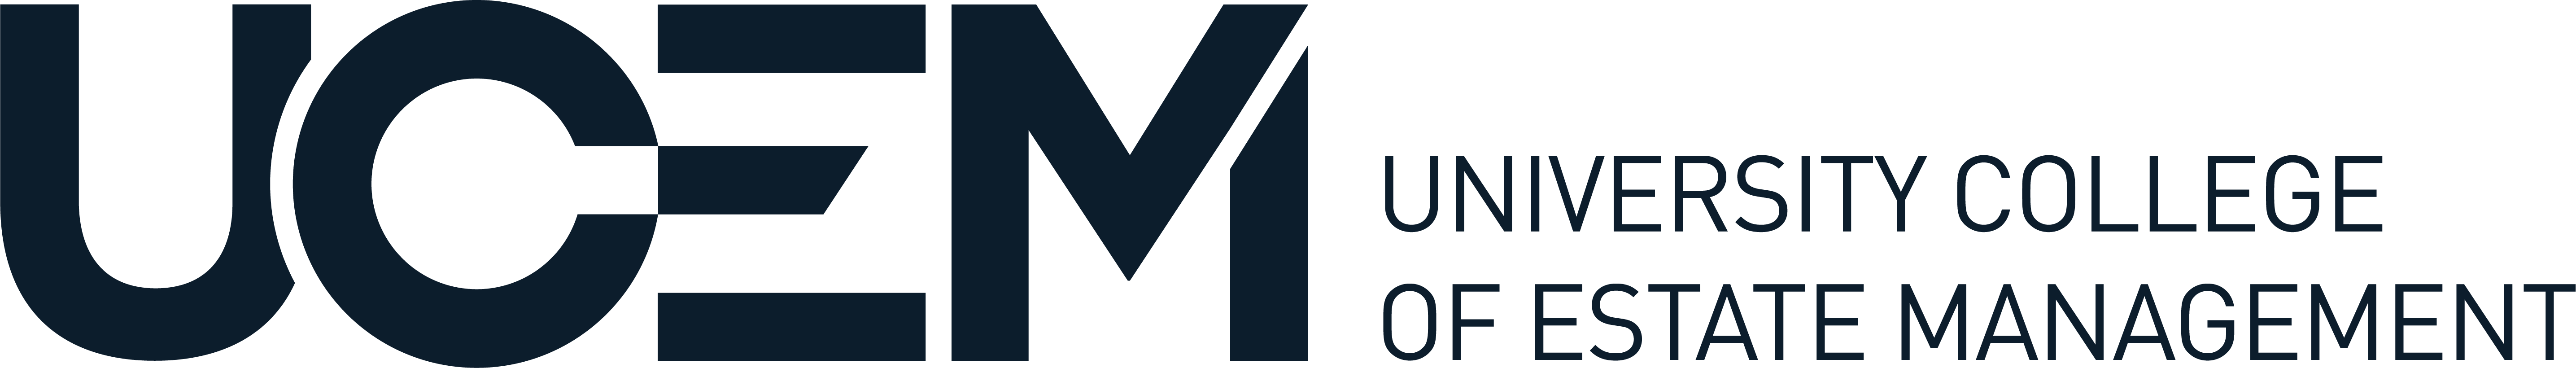 University College of Estate Management logo